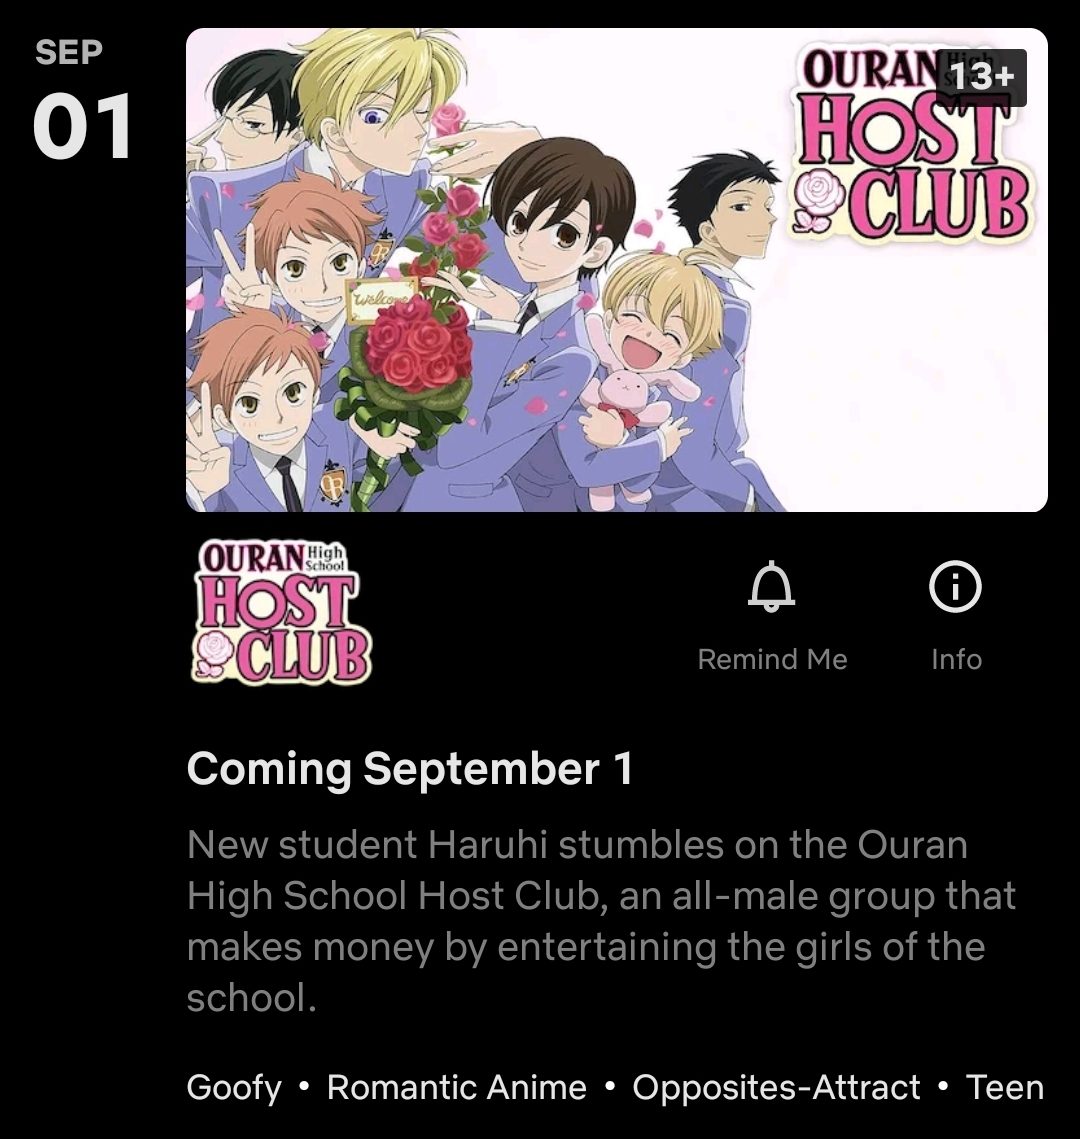 The Secret Revolution of Ouran High School Host Club - Anime News Network